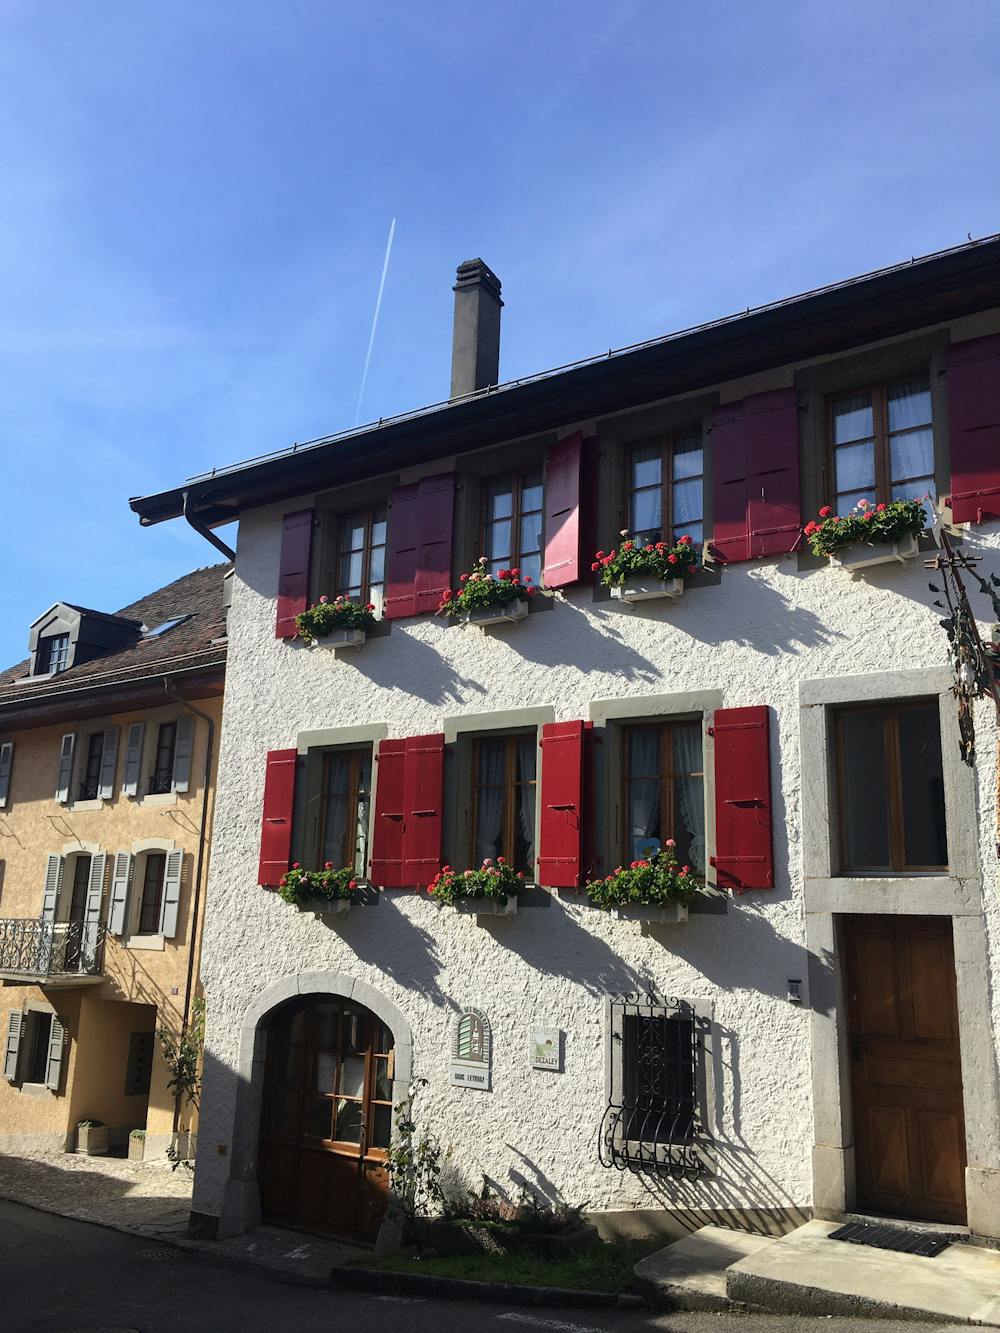 Photo from Via Francigena: Vineyards of Lavaux